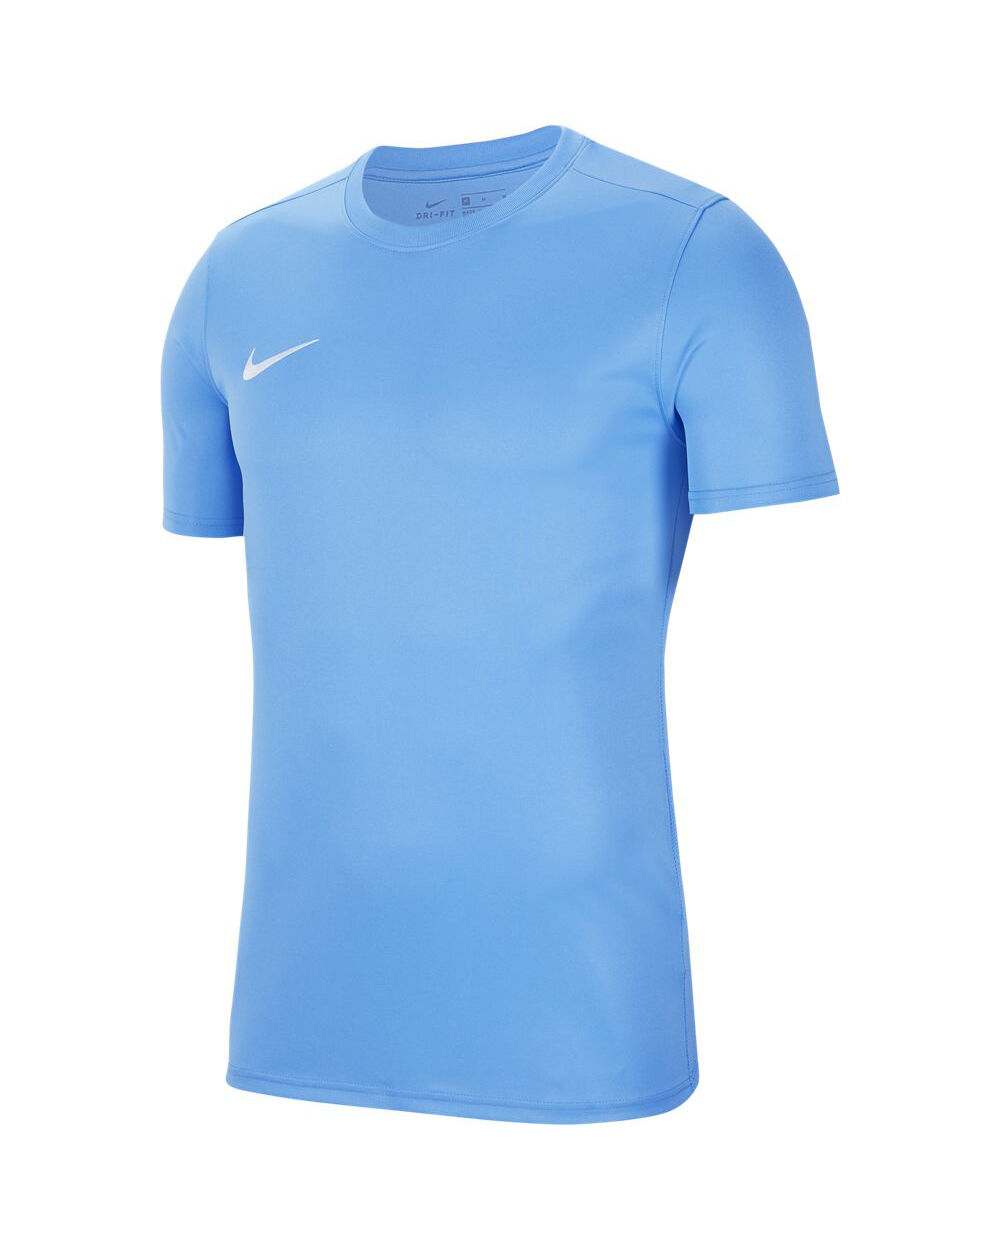 Camiseta Nike Park VII Azul Cielo Niño - BV6741-412